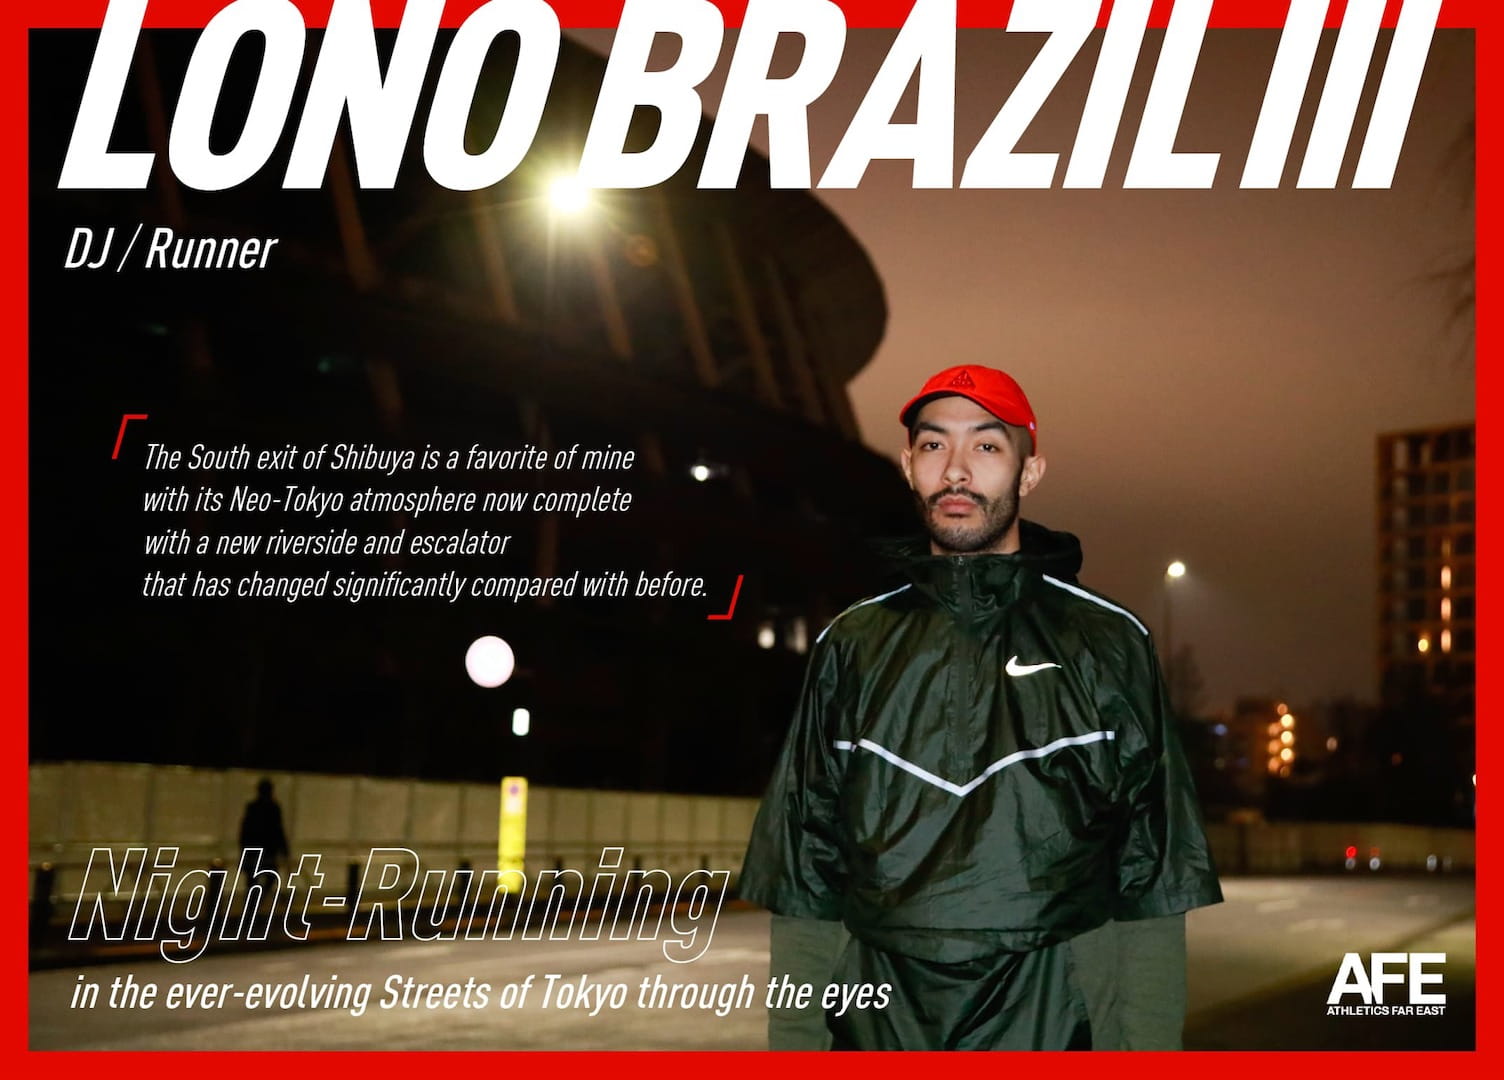 Night-Running in the ever-evolving Streets of Tokyo through the eyes of DJ / Runner LONO BRAZIL III